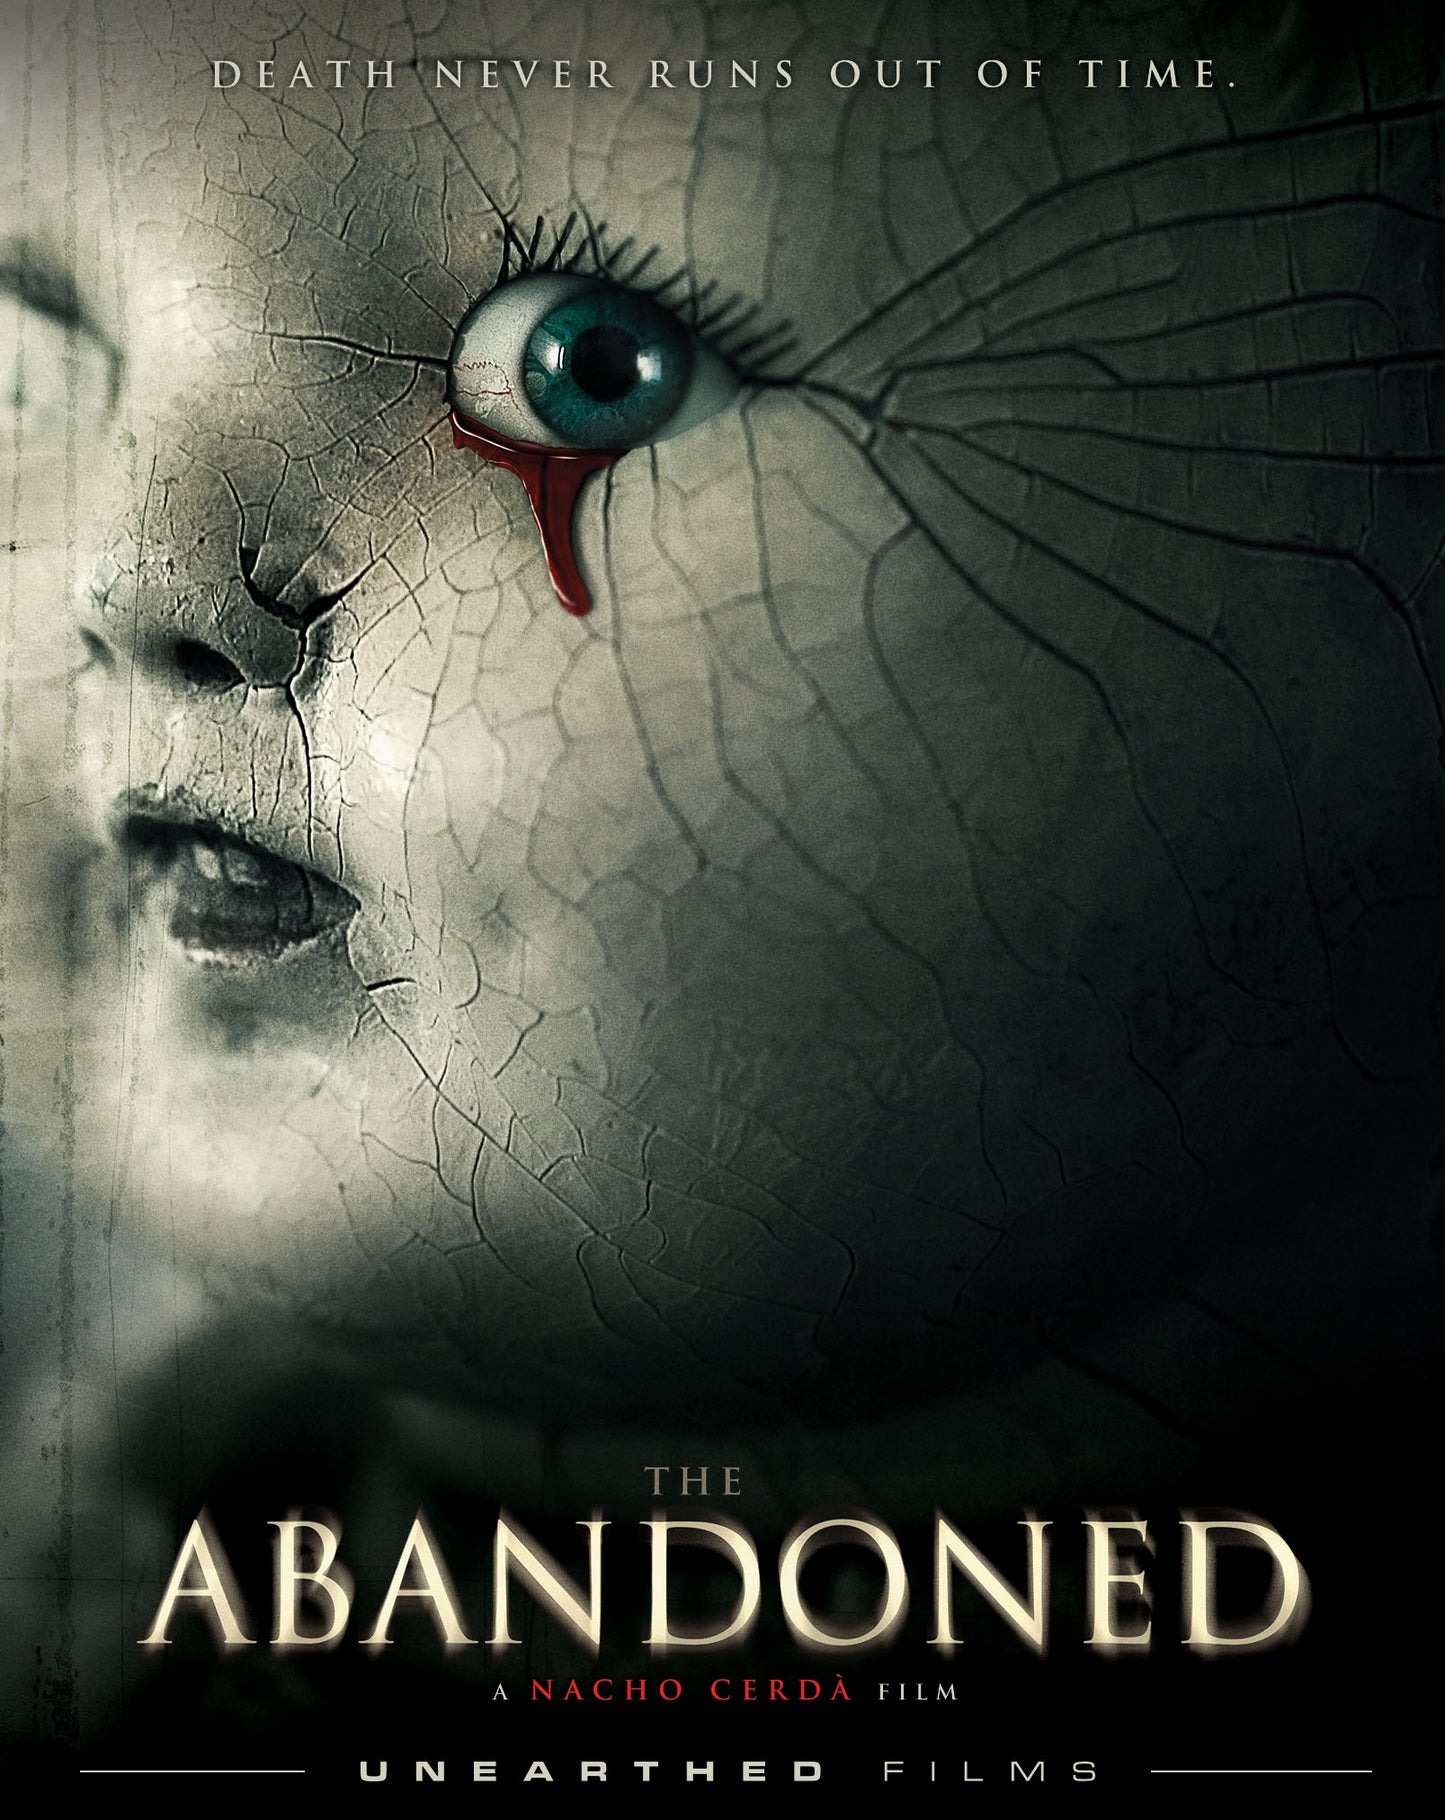 Abandoned [Blu-ray] cover art